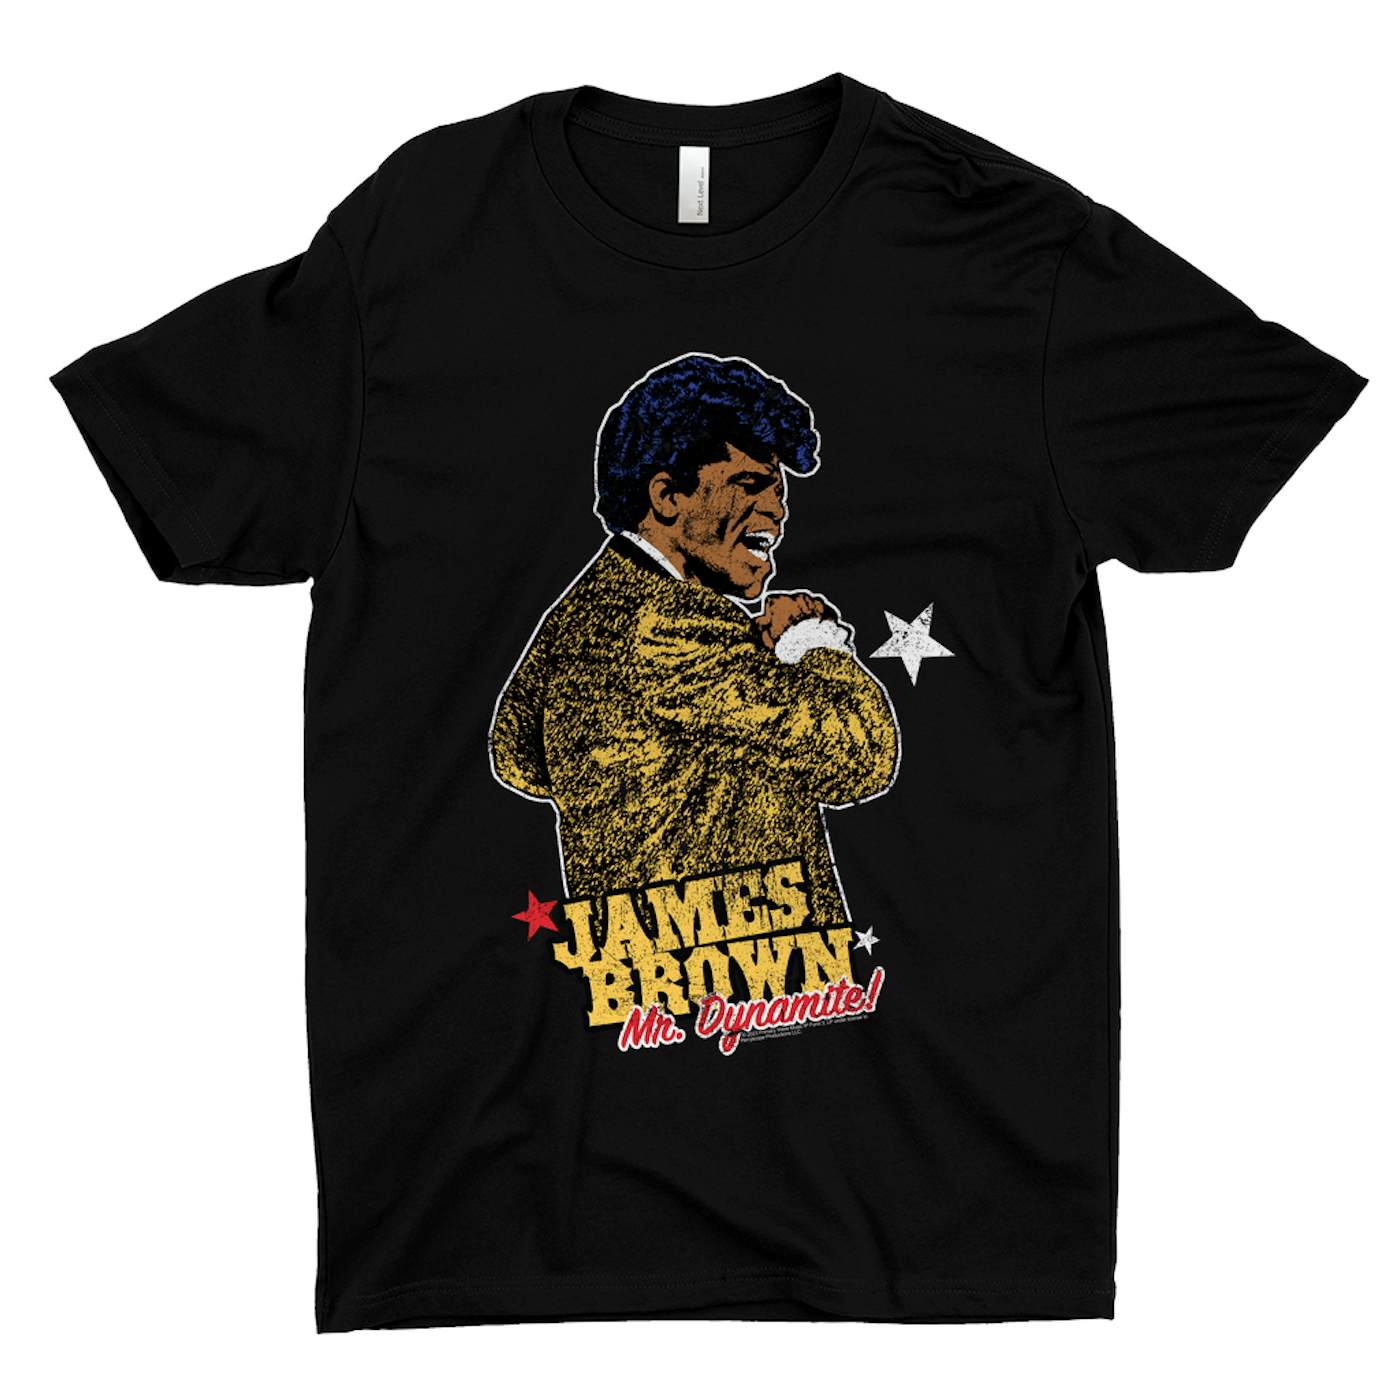 James Brown T-Shirt | Mr. Dynamite Chalk Effect Distressed James Brown Shirt